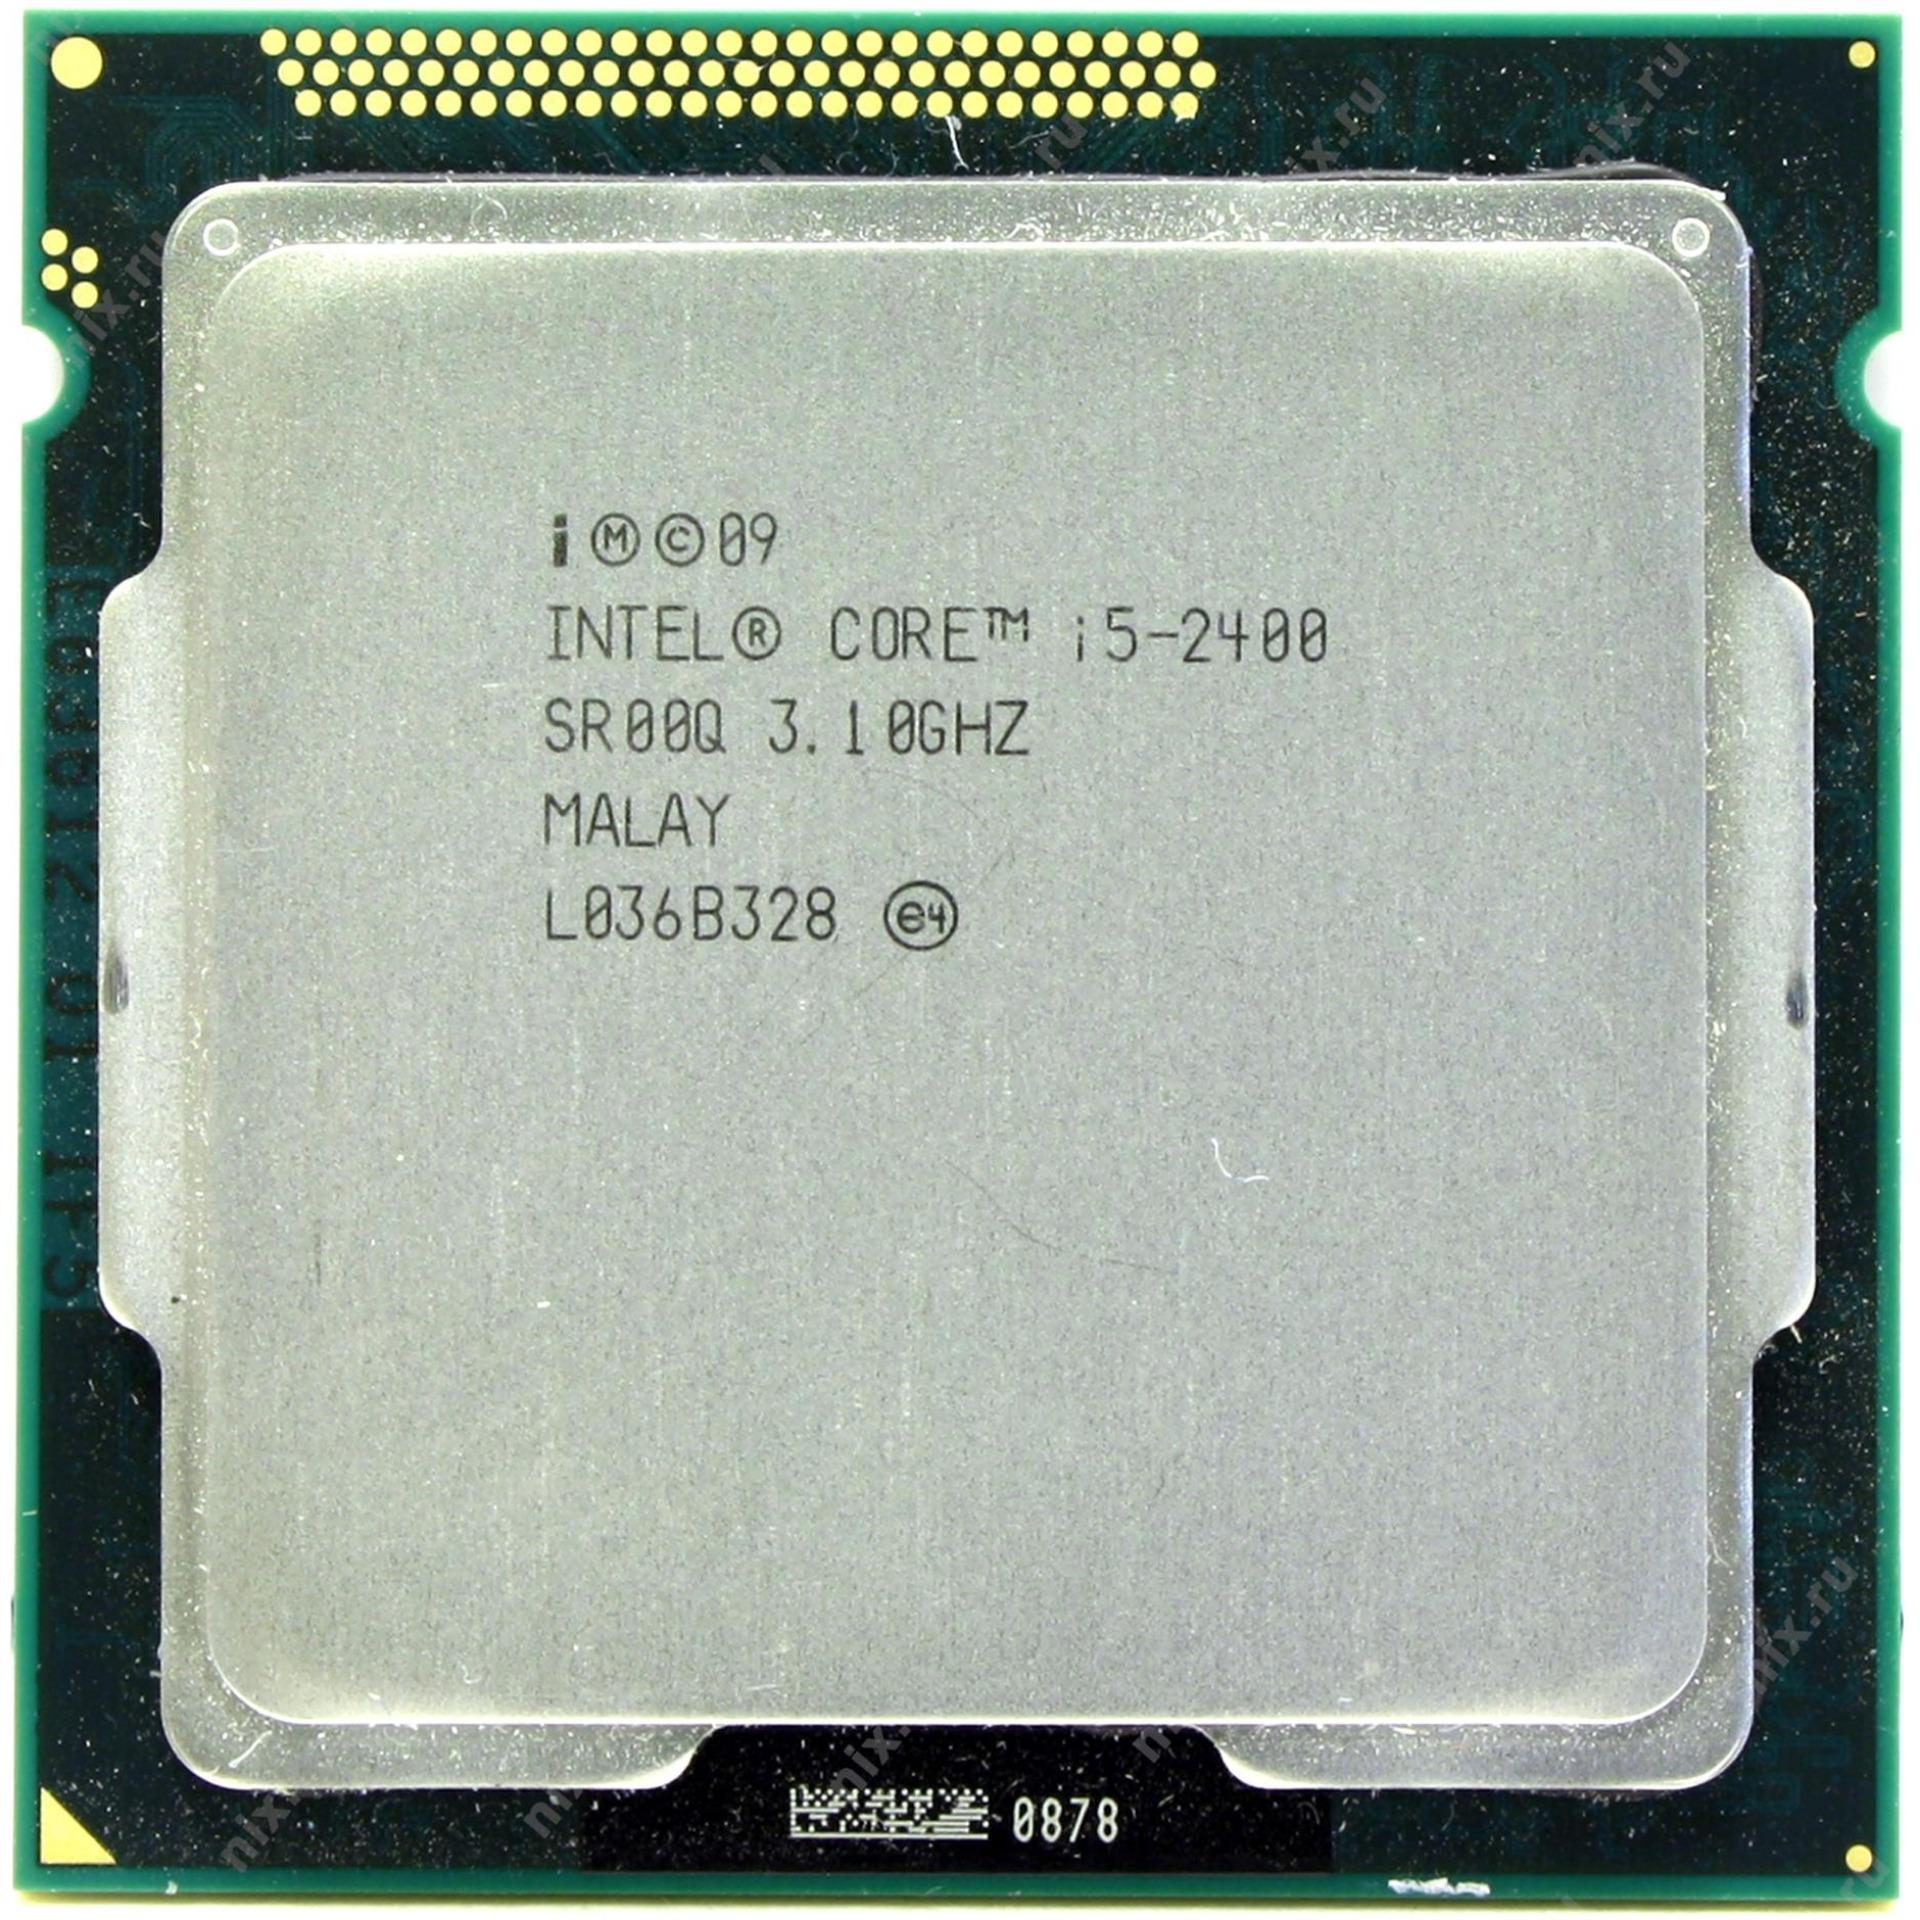 intel core i5 2400, 3.4 ghz quad core